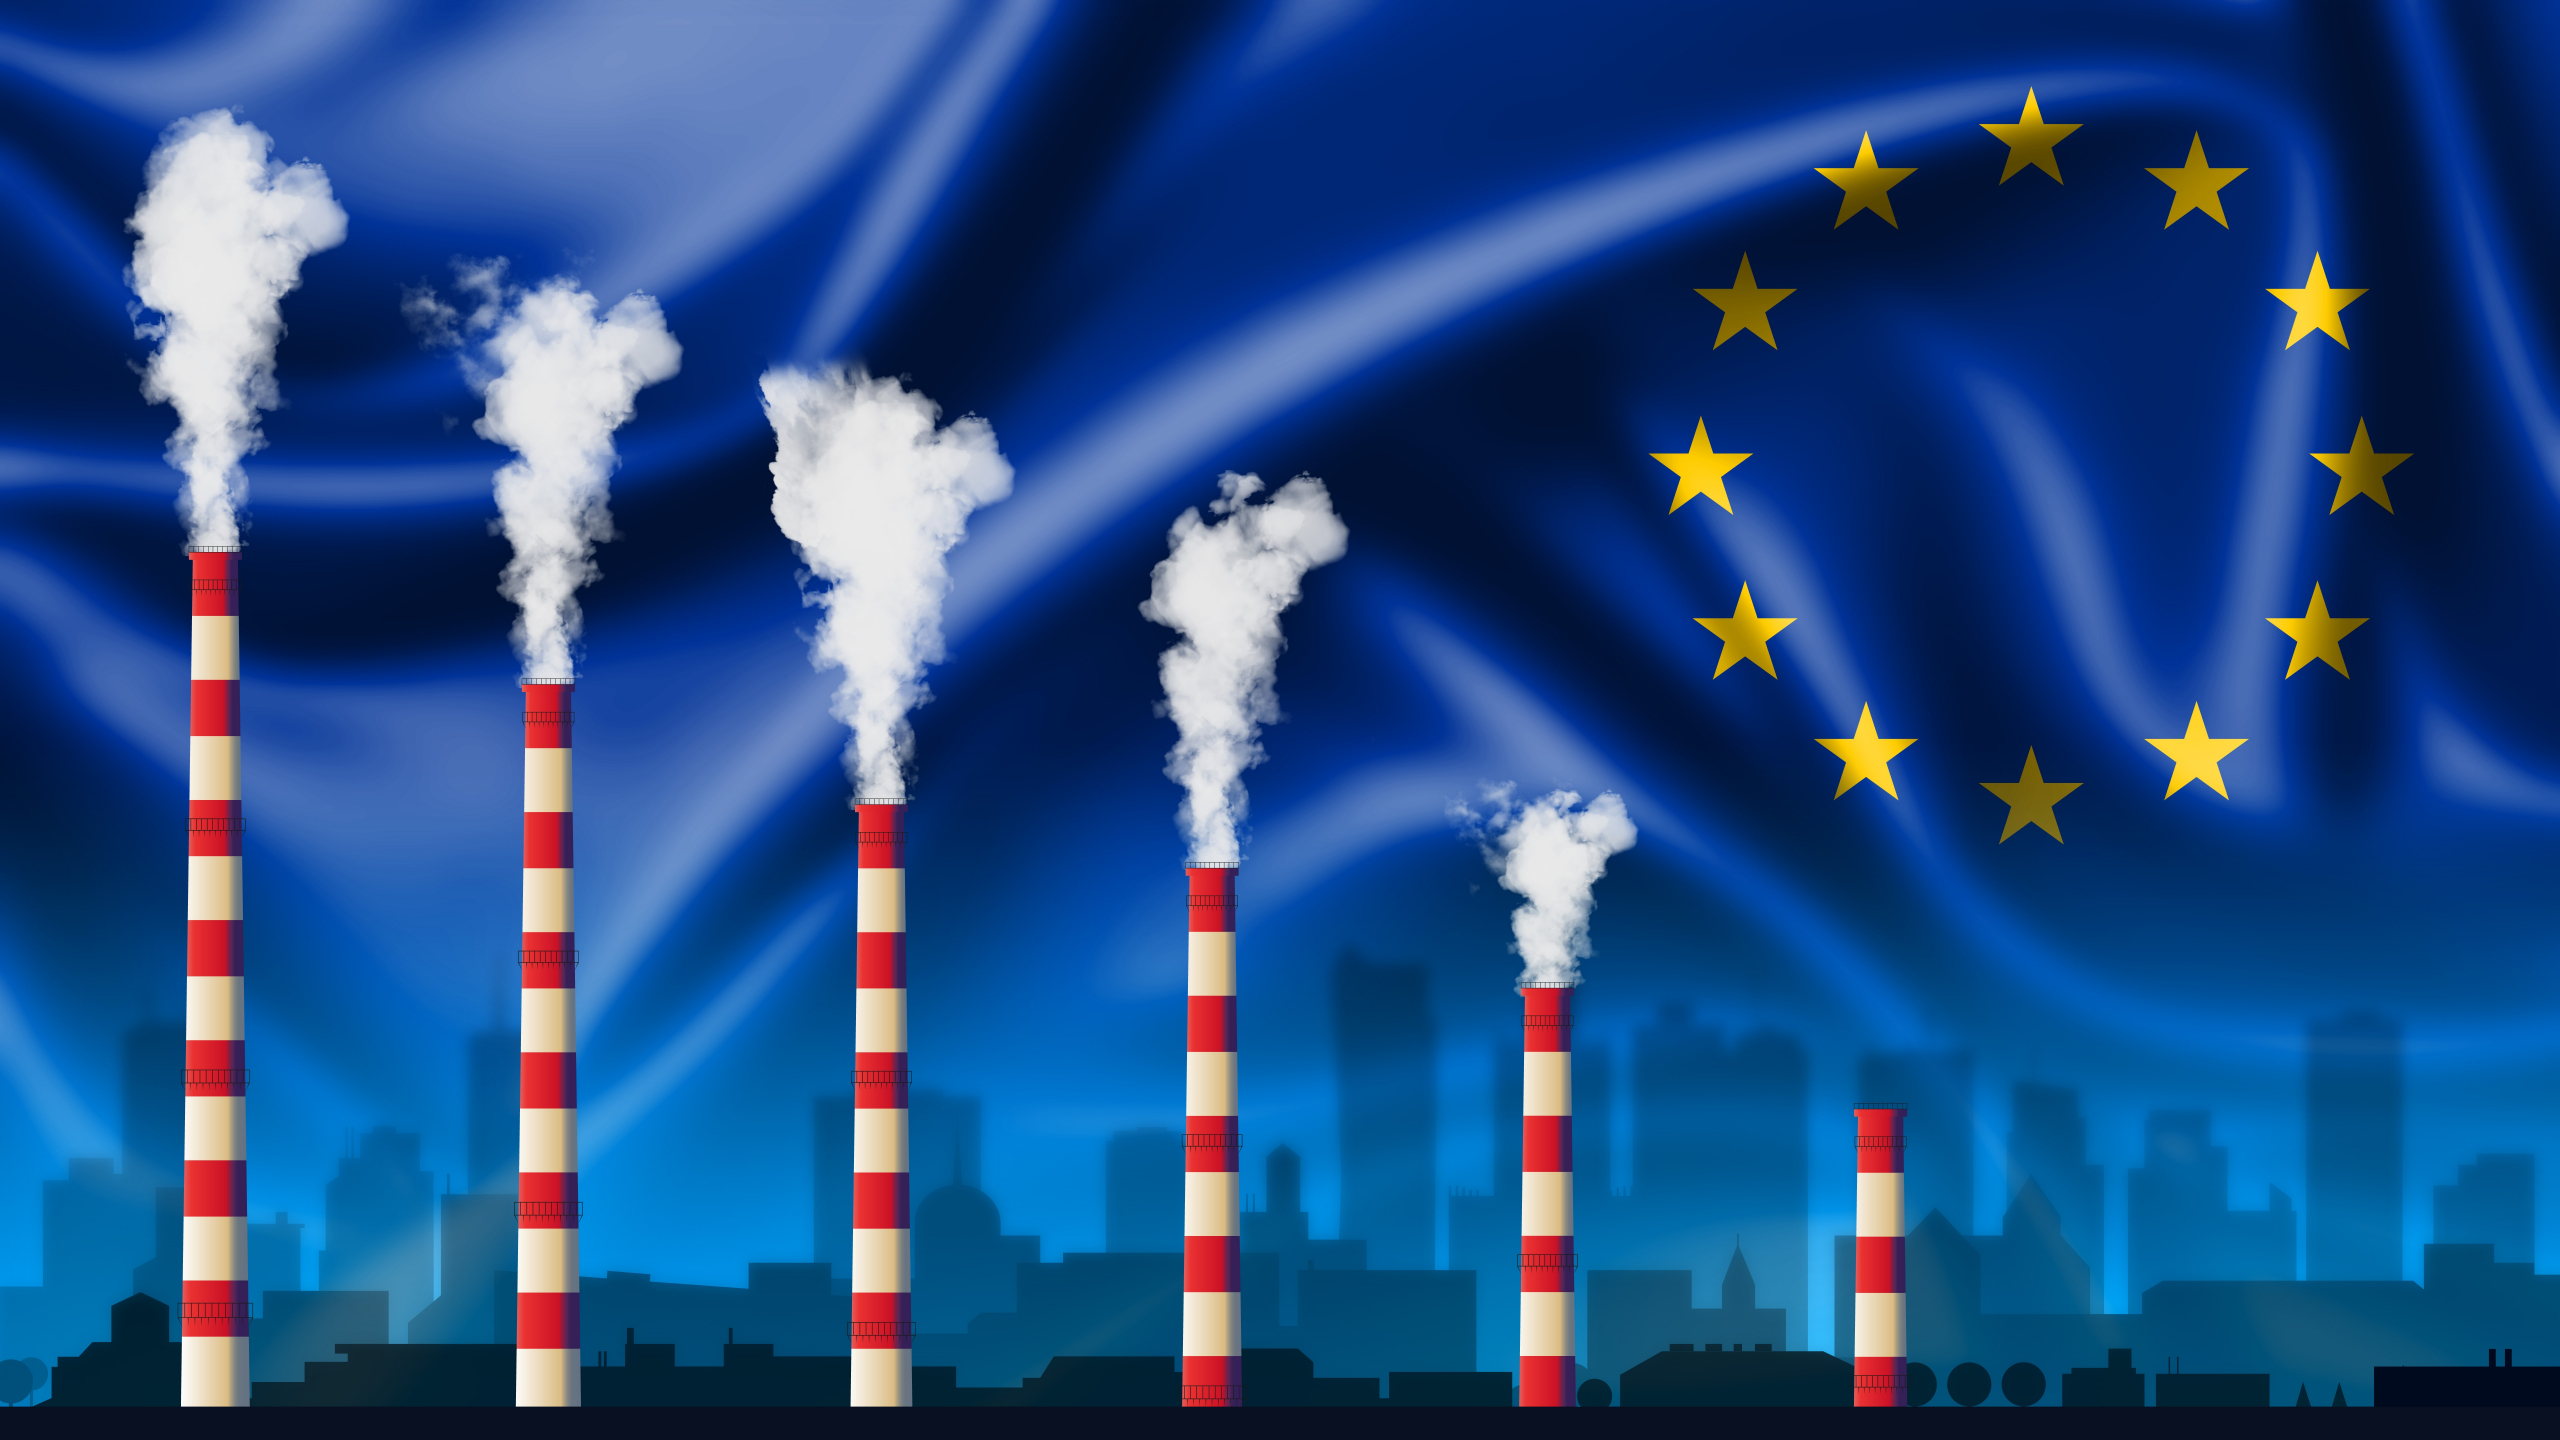 Zemlje EU još uvek vode "rat" oko zelene i nuklearne energije